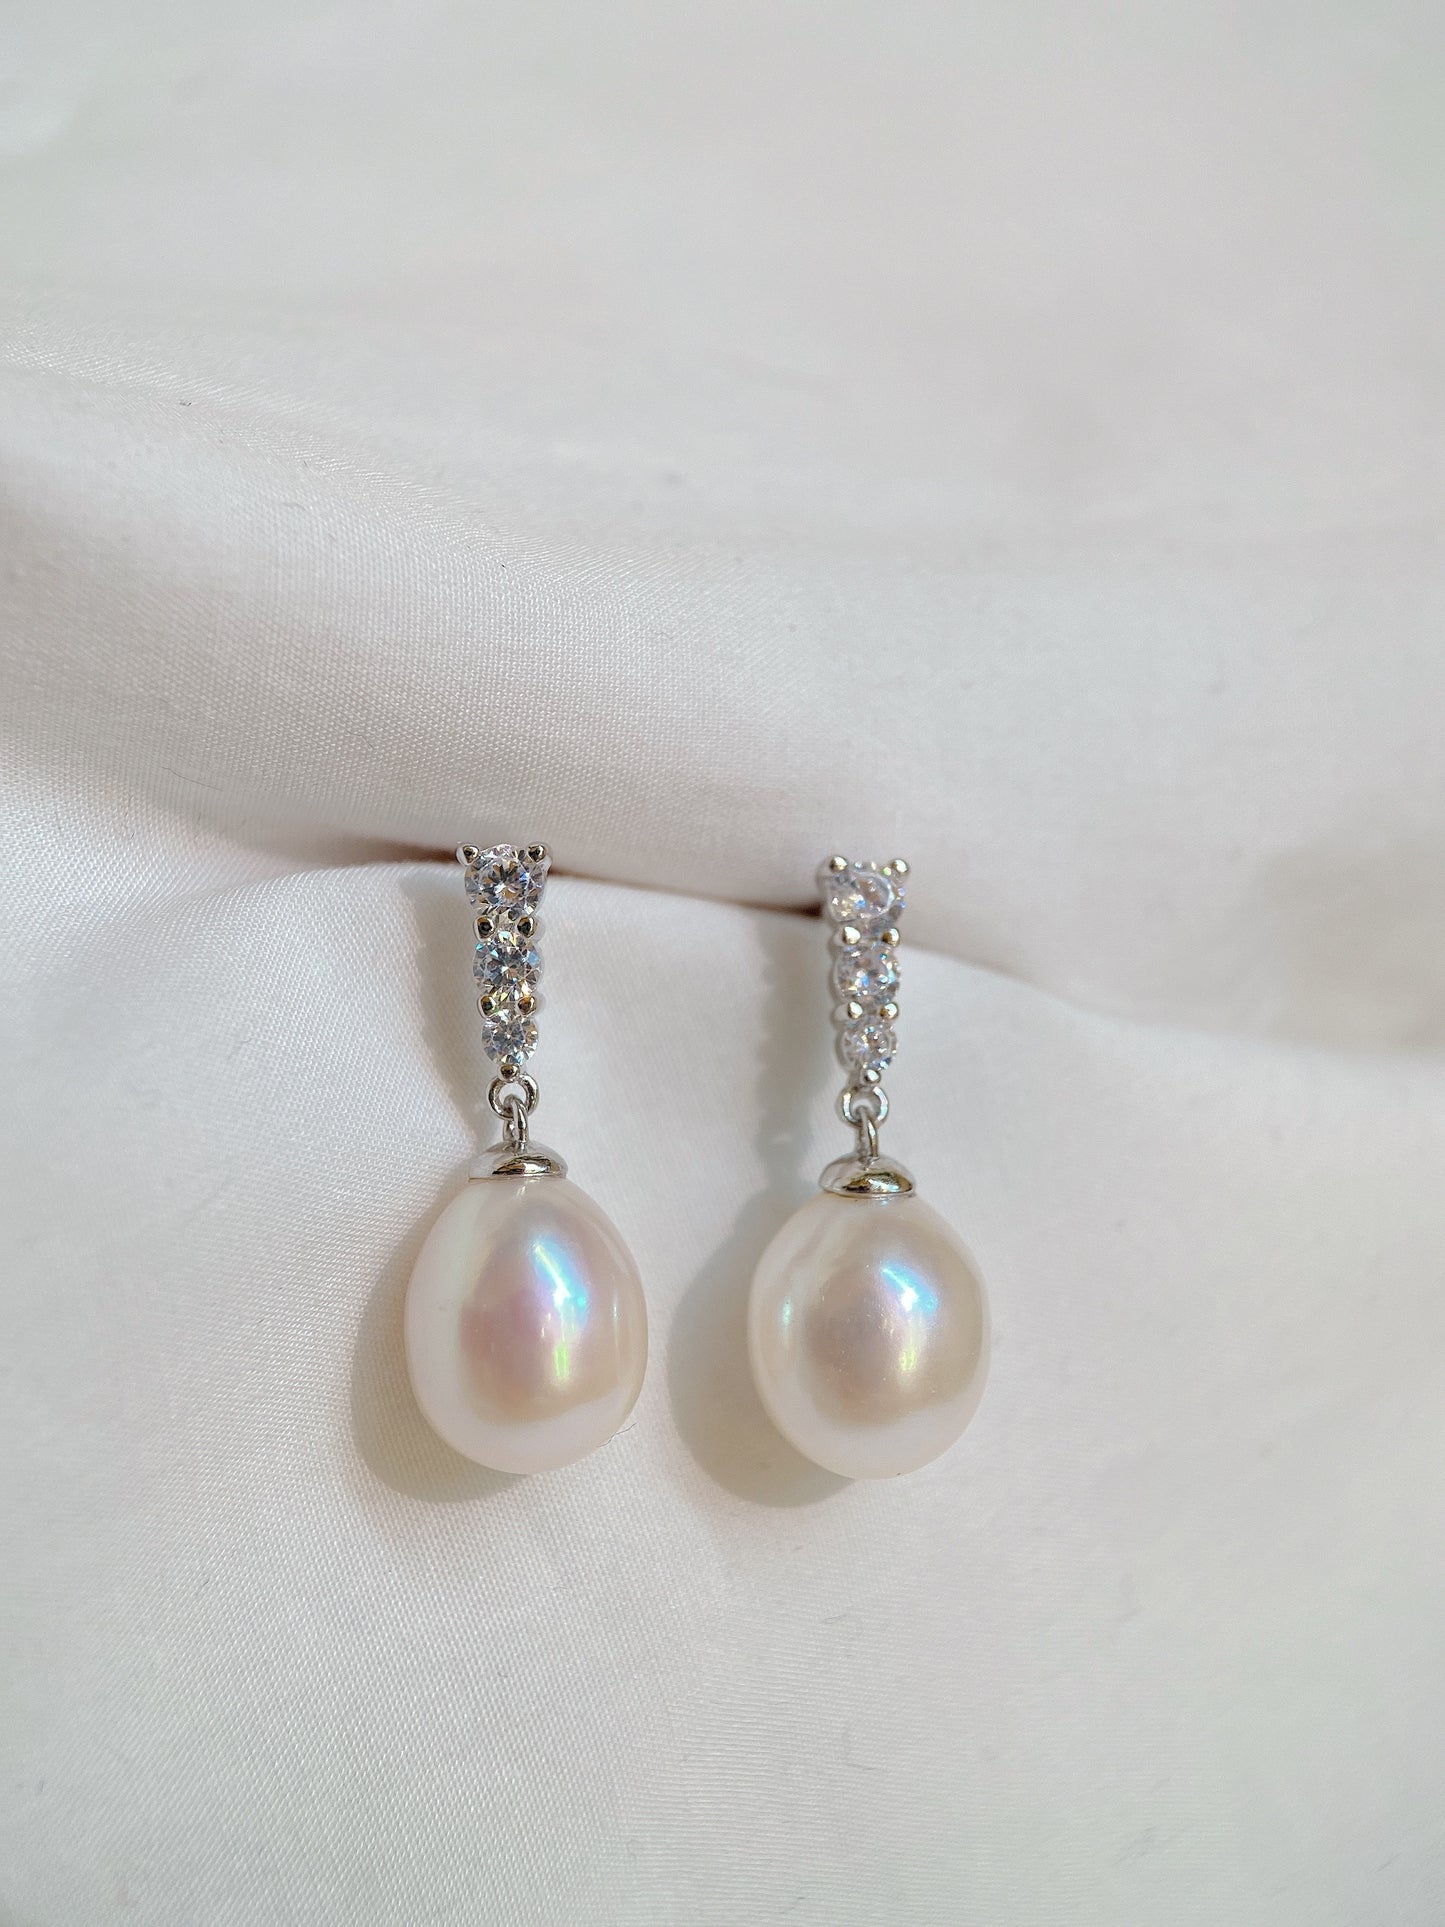 White Gold Plated Sterling Silver Freshwater Pearl Earrings, ER19